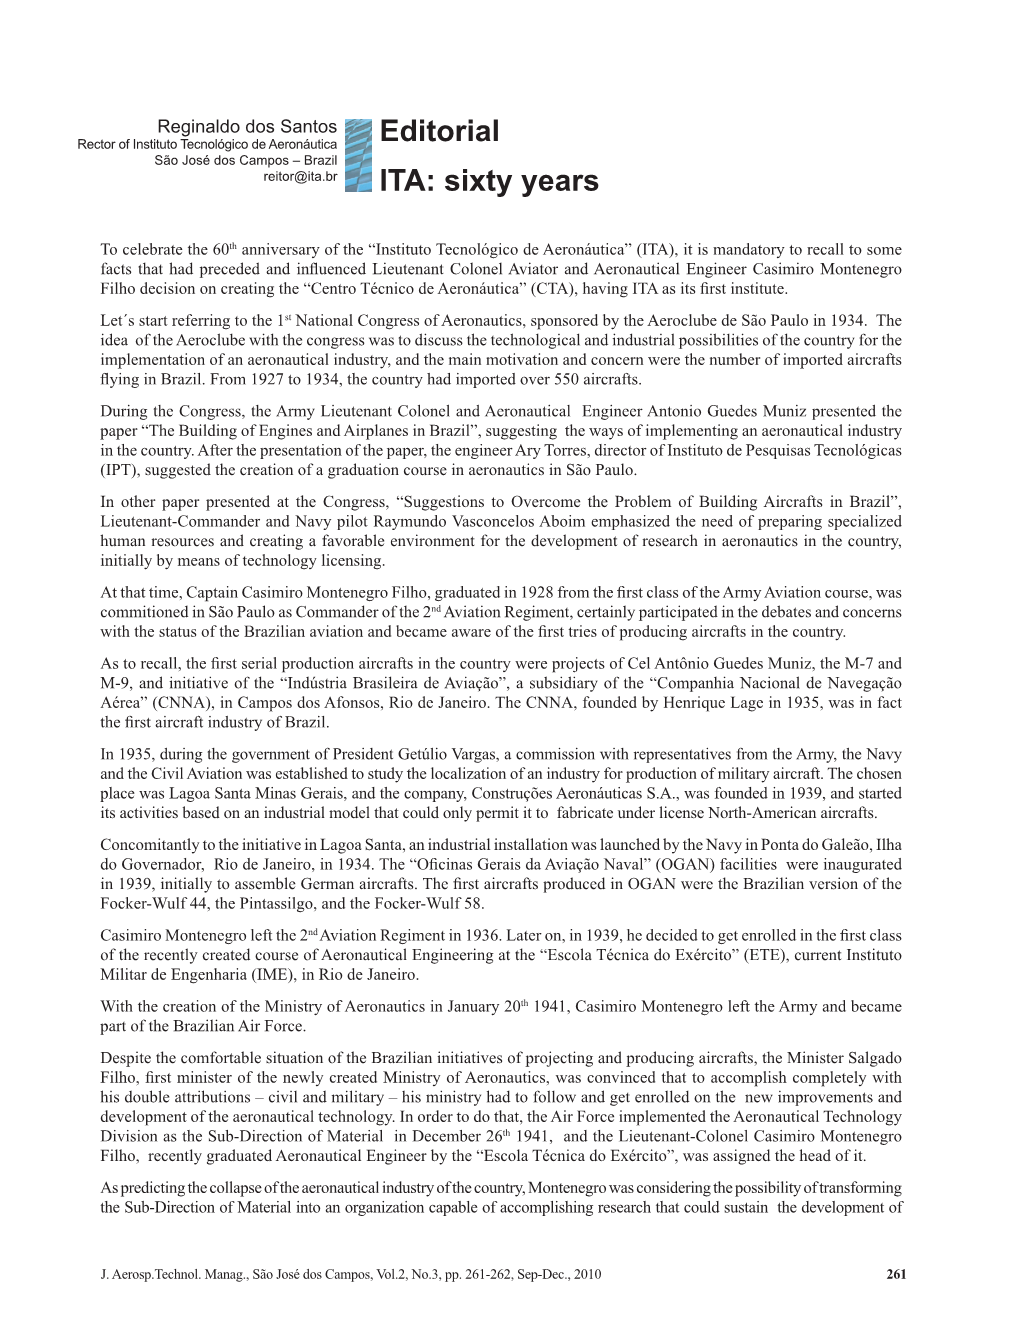 Editorial ITA: Sixty Years